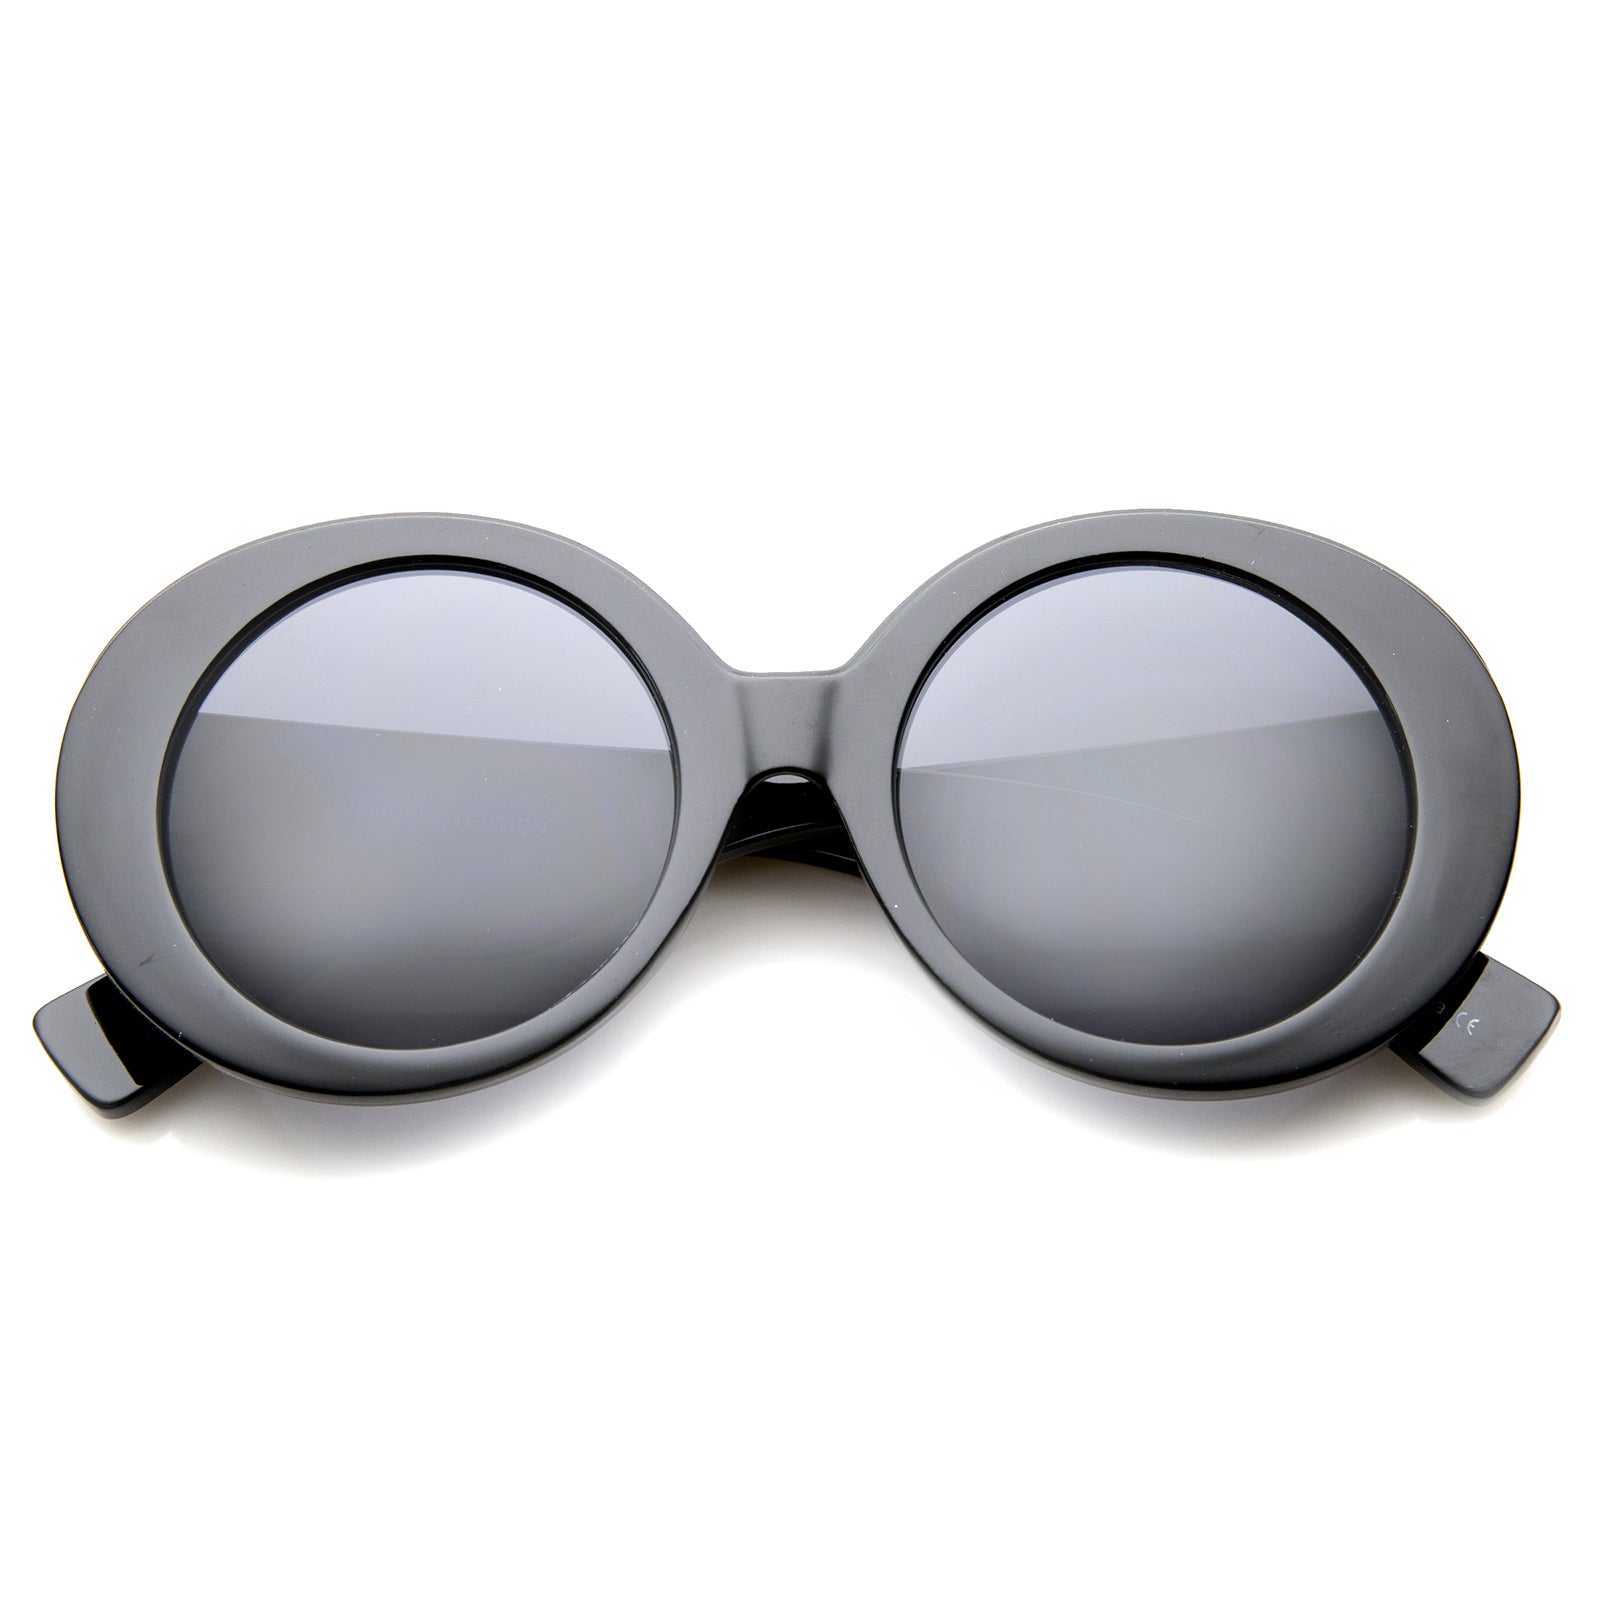 Womens High Fashion Glam Chunky Round Oversize Sunglasses 50mm, Black / Smoke